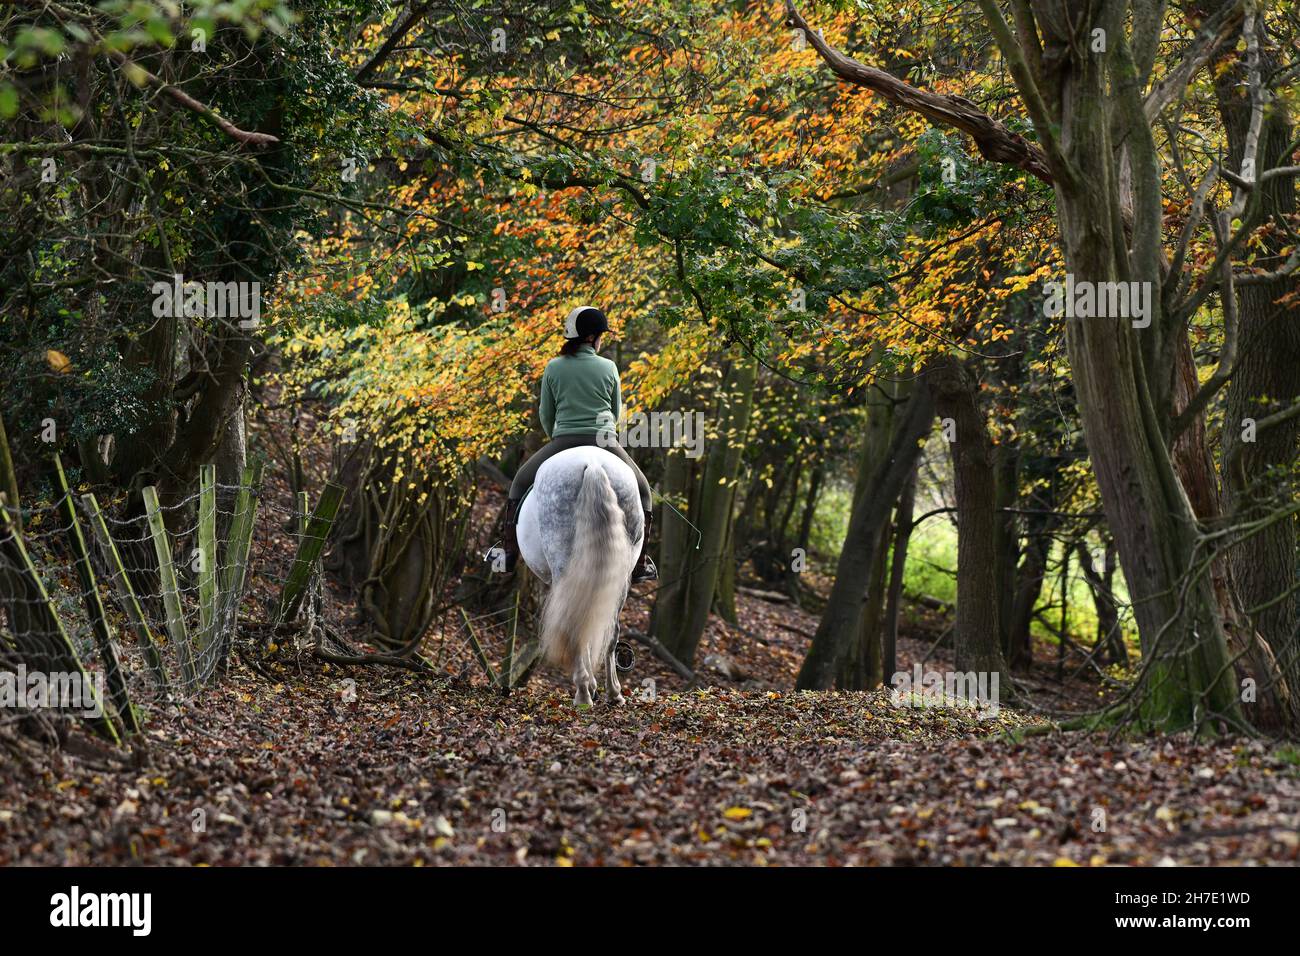 Glorious Autumn! A lone rider on a white horse riding through woodland near Ironbridge in Shropshire. Stock Photo